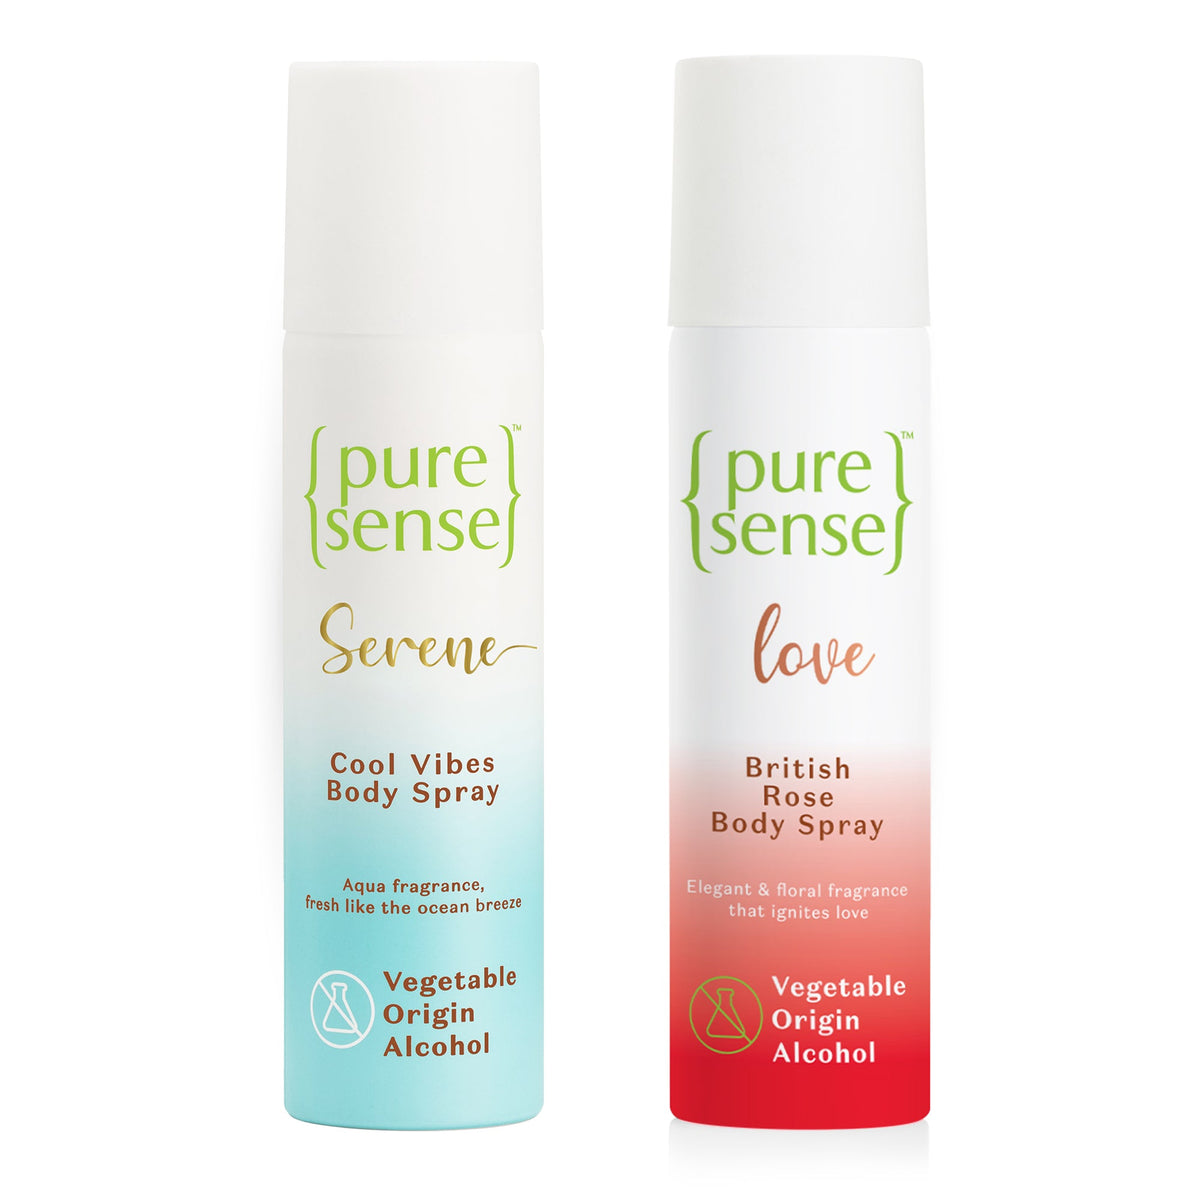 PureSense Serene Cool Vibes Body Spray & PureSense Love British Rose Body Spray combo 150ml + 150ml | 300ml